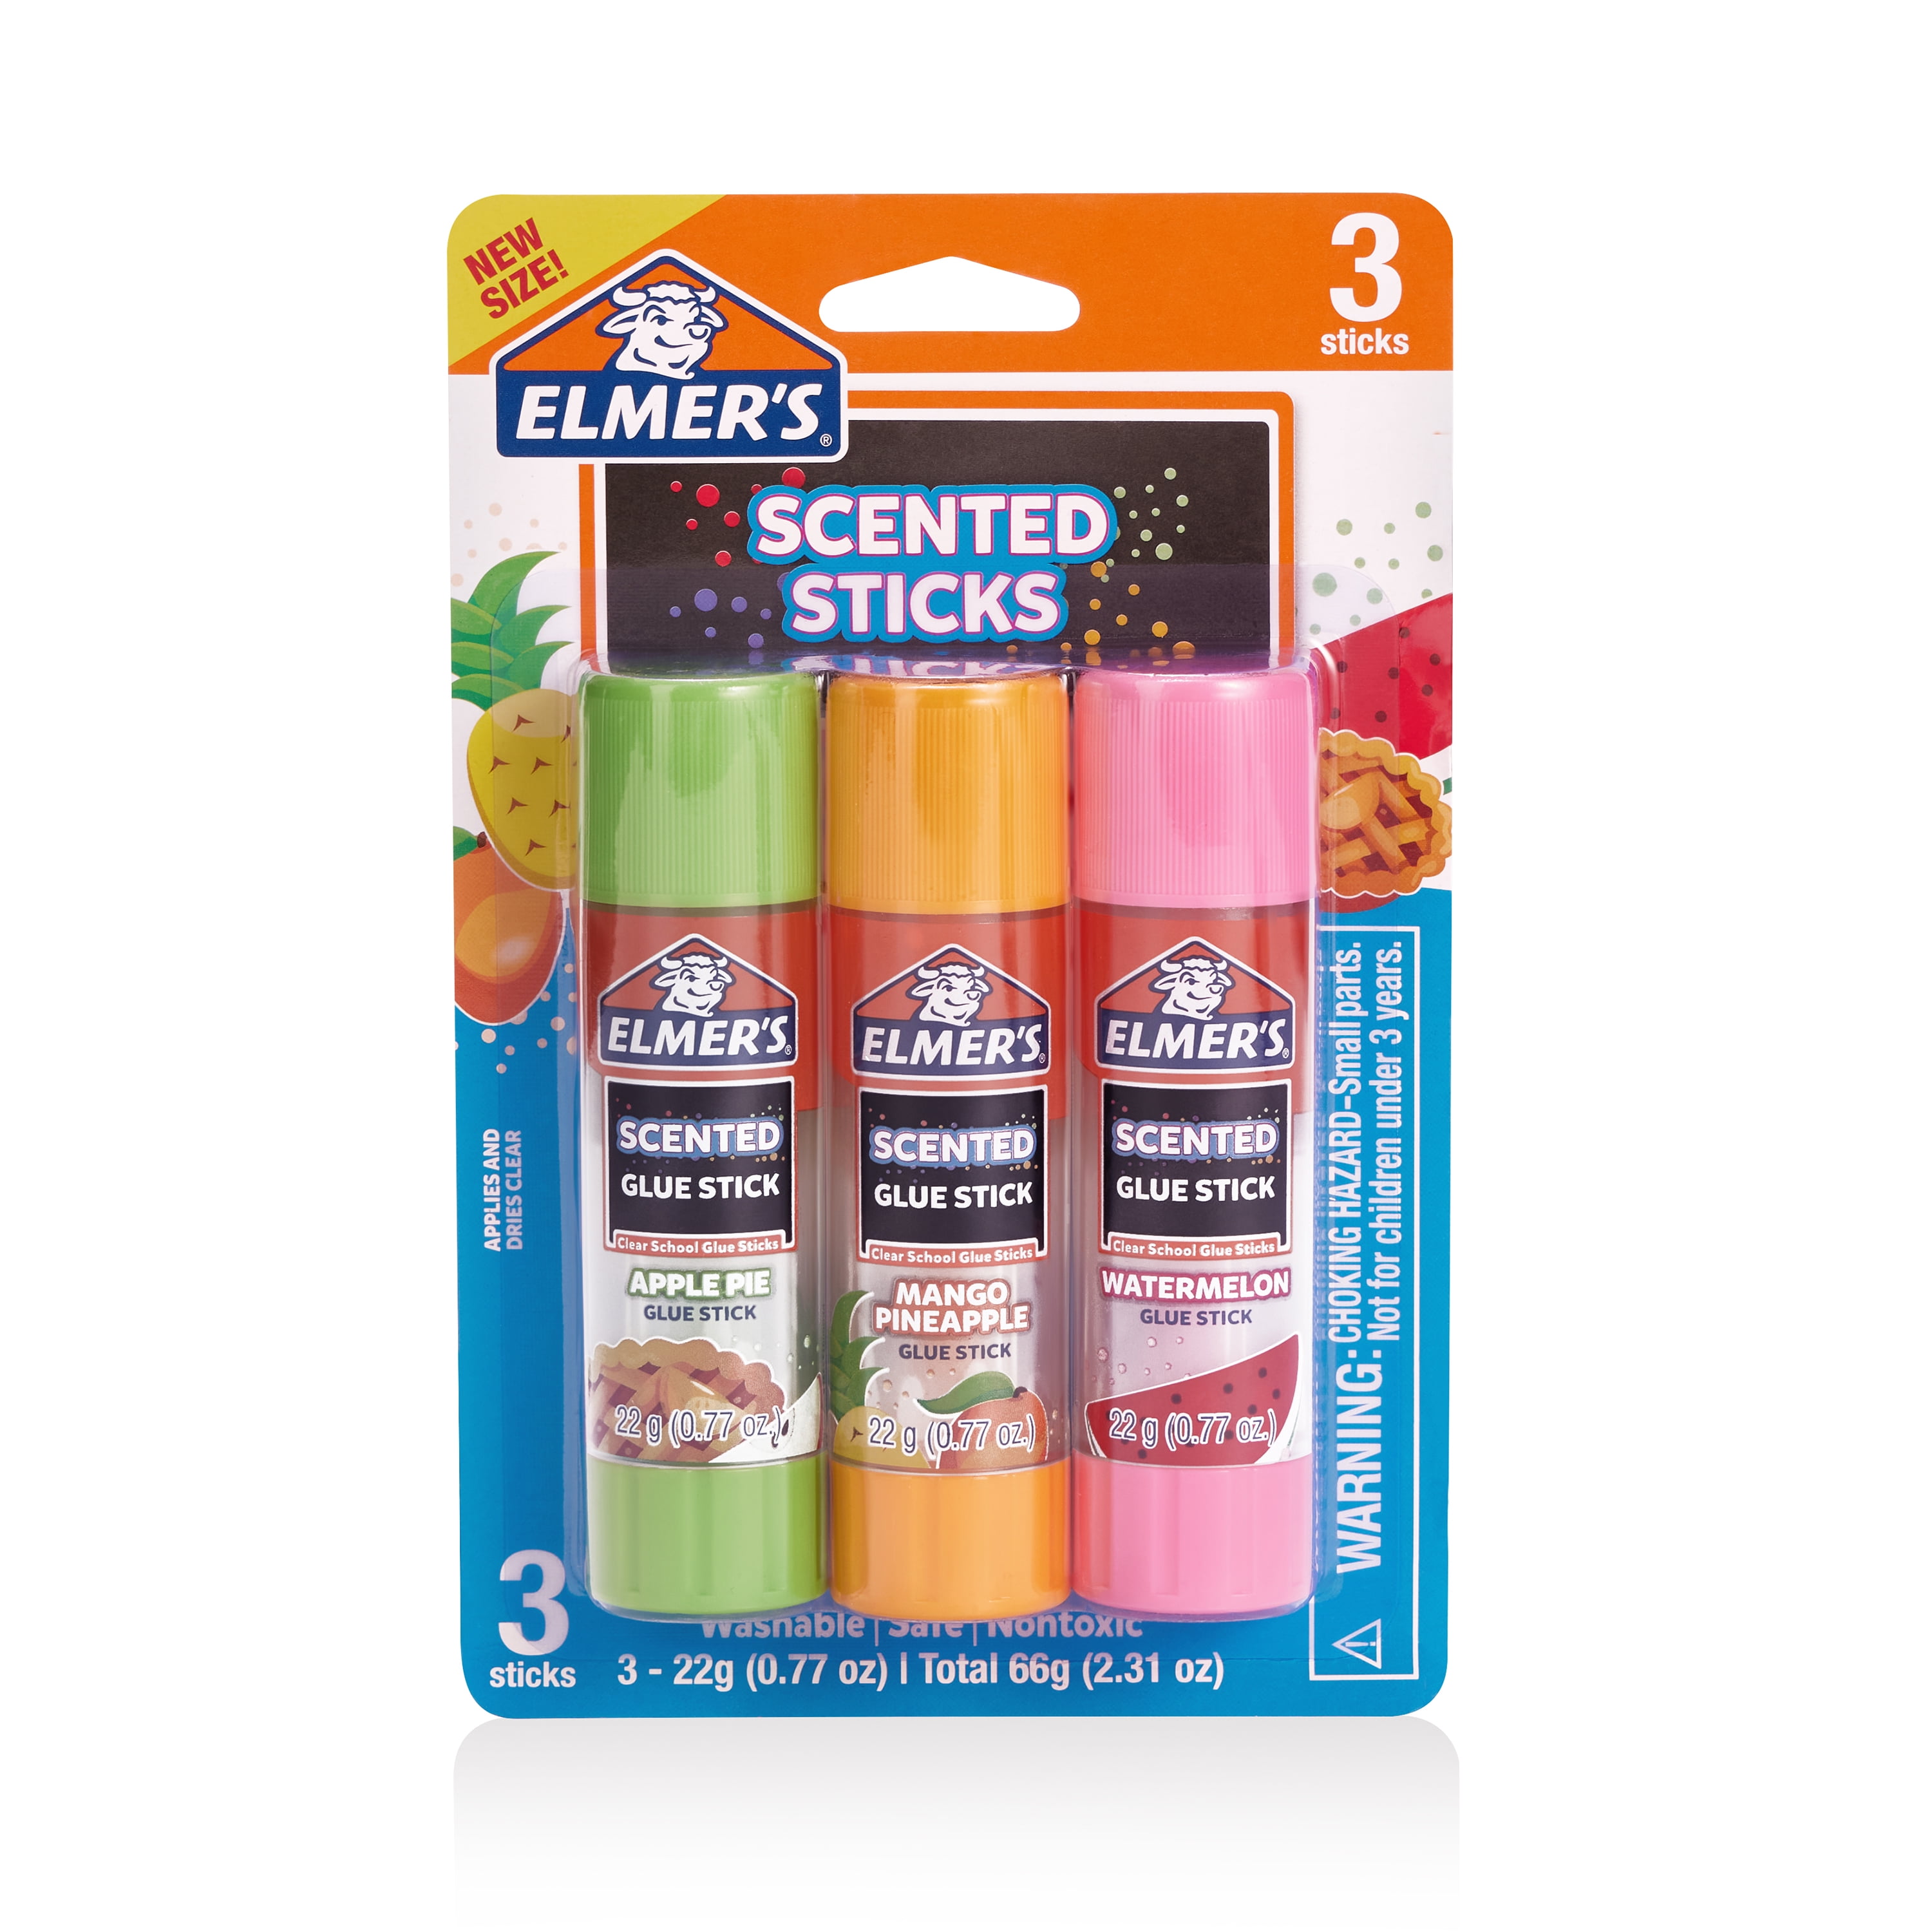 Elmer's Giant Scented Glue Sticks Variety Pack, 22 Gram, 3 Count